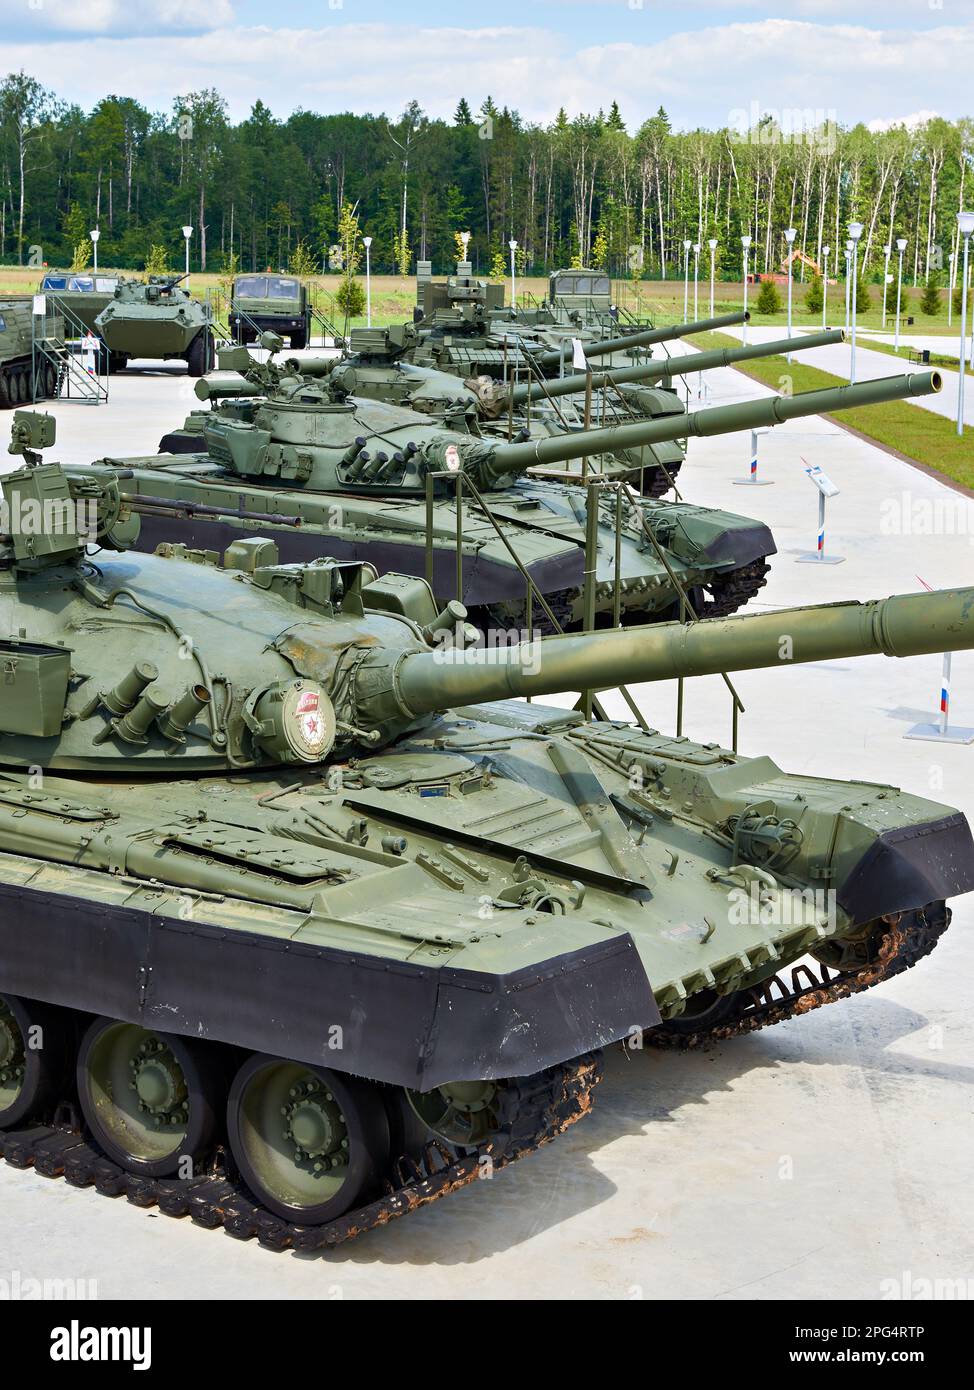 PARK PATRIOT, KUBINKA, MOSCOW REGION, RUSSIA - July 11, 2017: Soviet main battle tanks Stock Photo